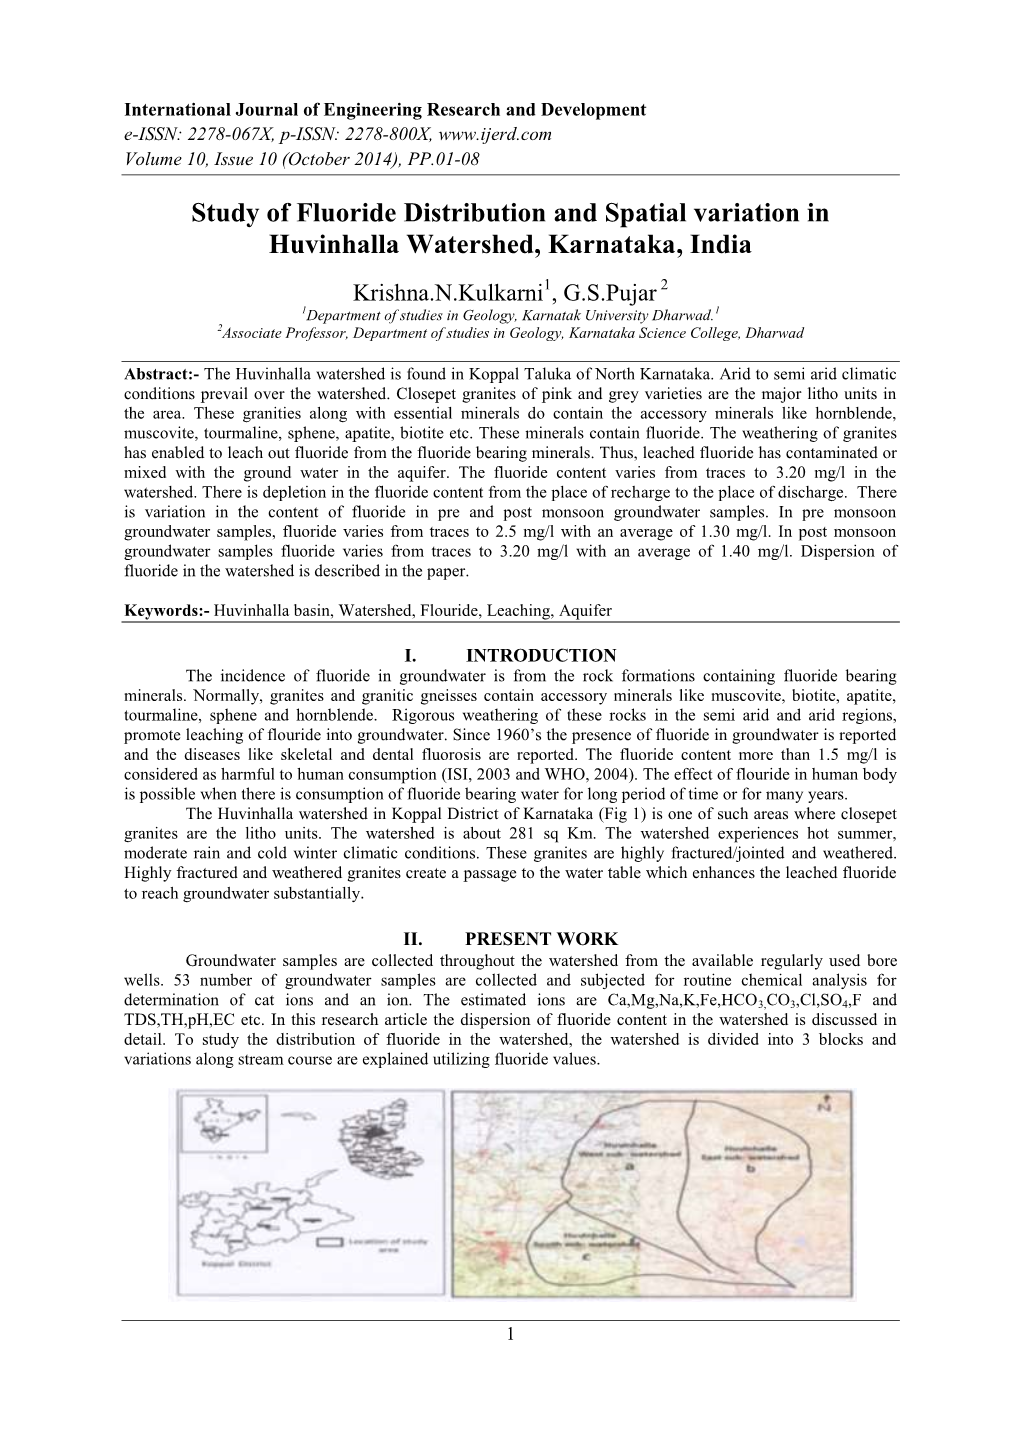 Study of Fluoride Distribution and Spatial Variation in Huvinhalla Watershed, Karnataka, India